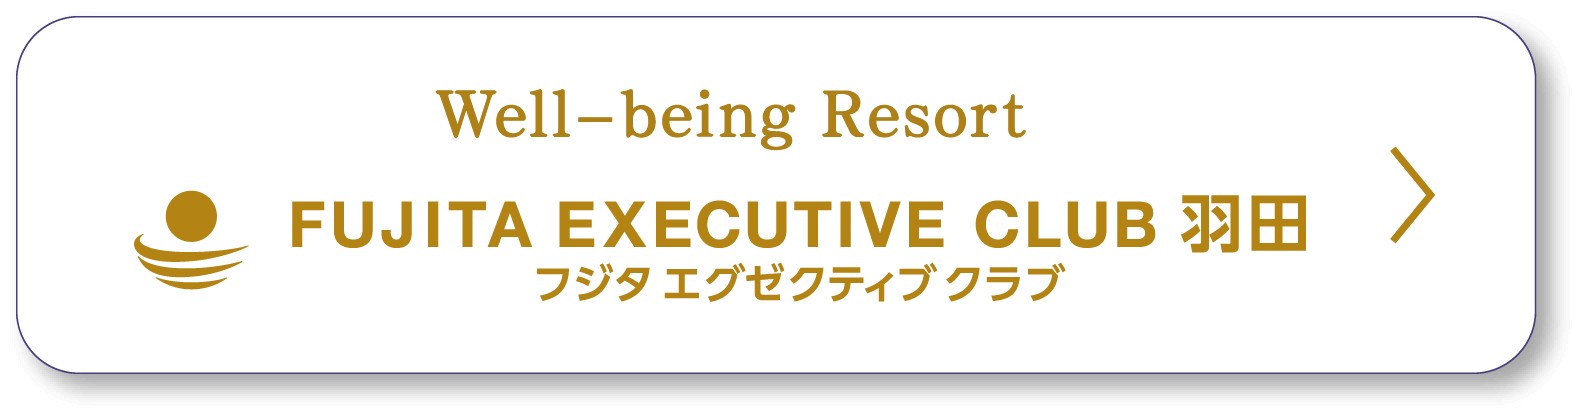 Well-being Resort FUJITA EXECUTIVE CLUB 羽田